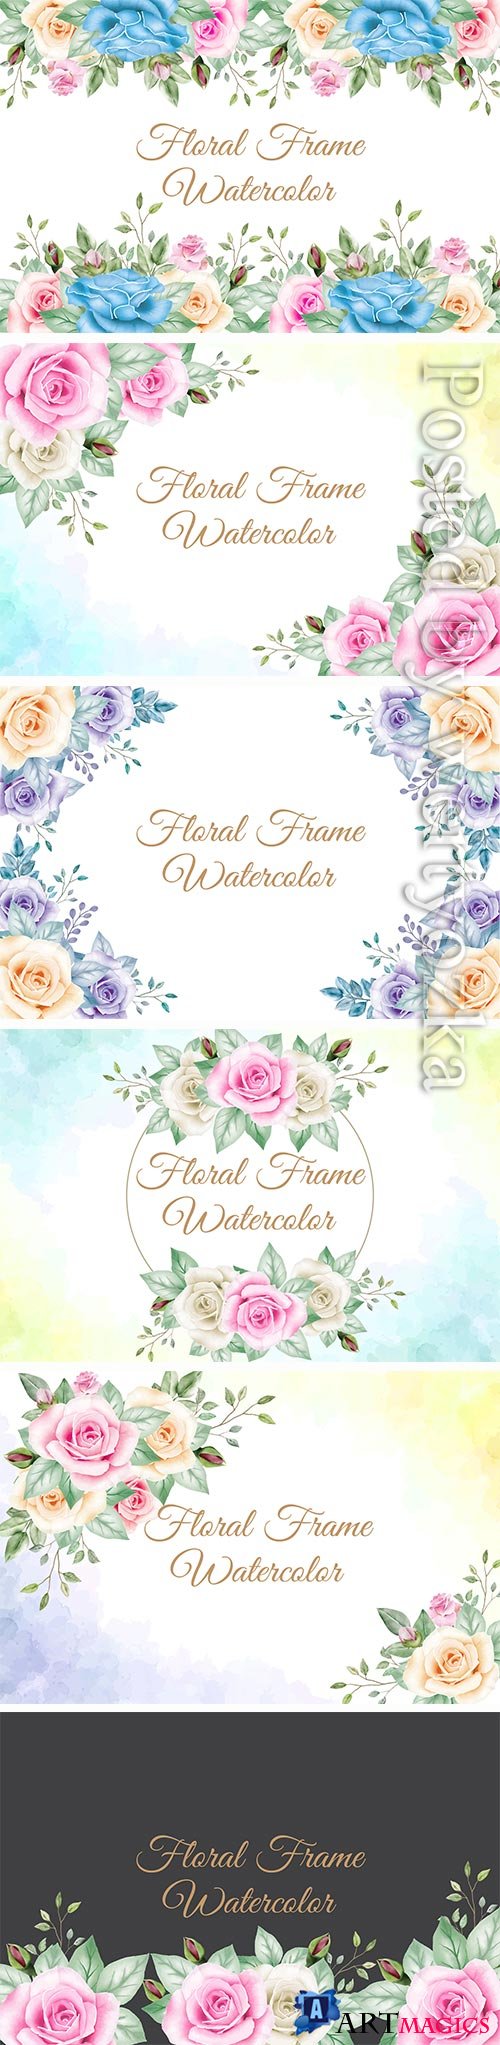 Floral frame watercolor vector design